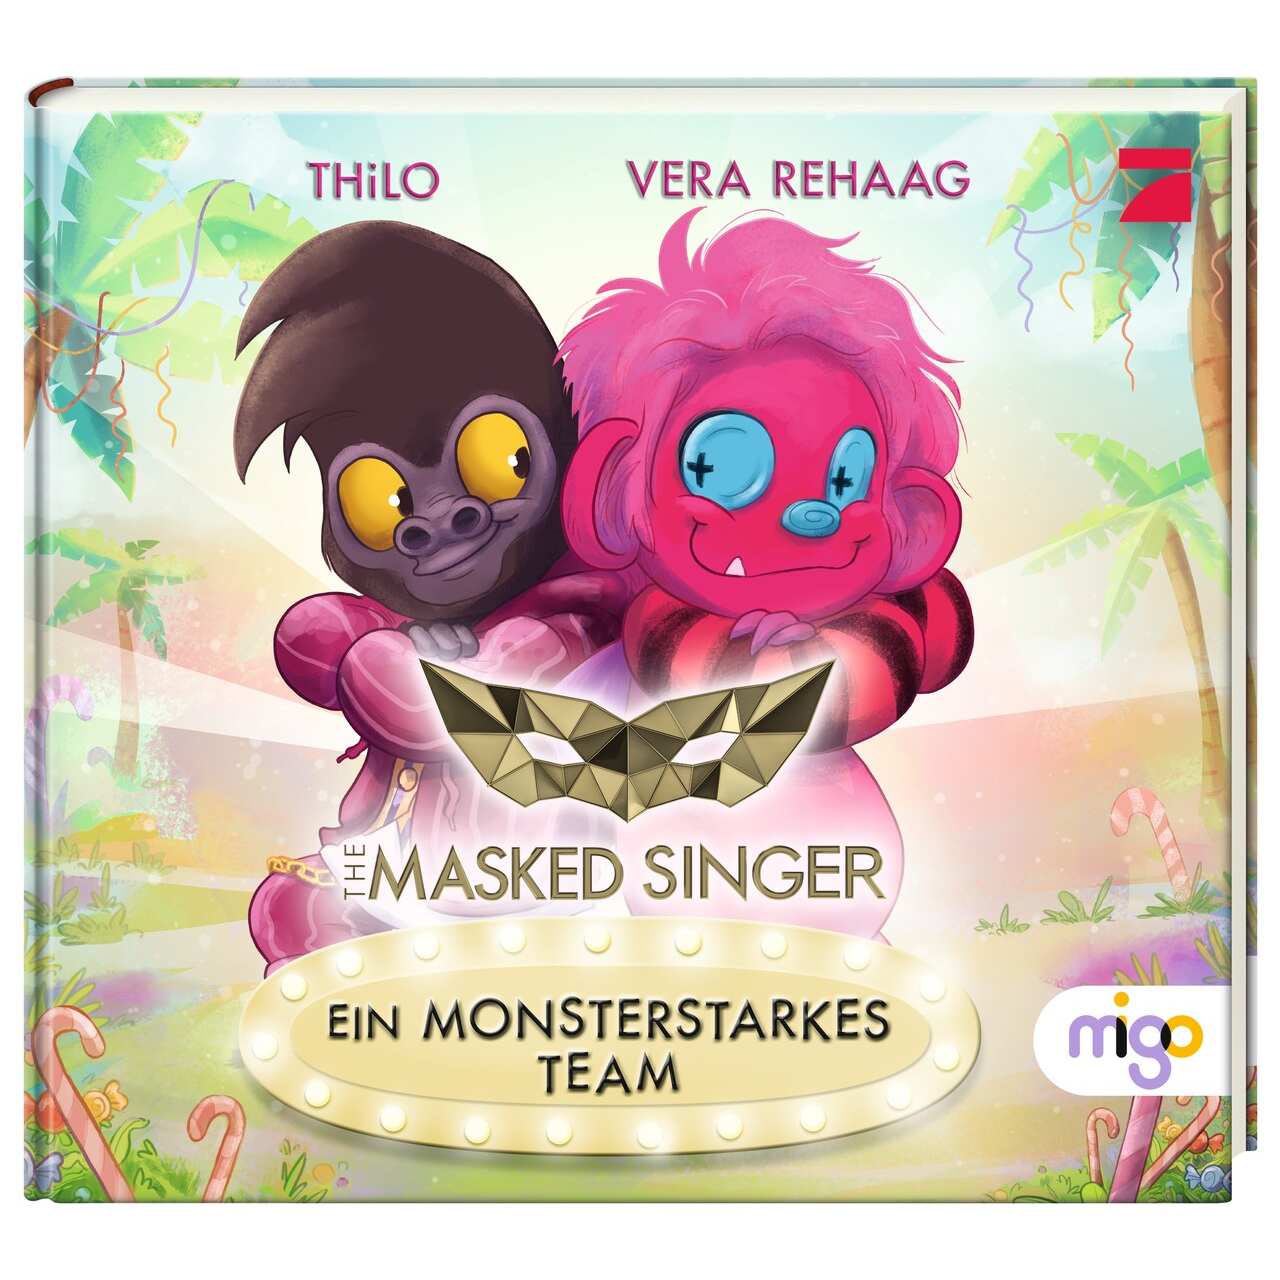 The Masked Singer“-Kinderbuchreihe